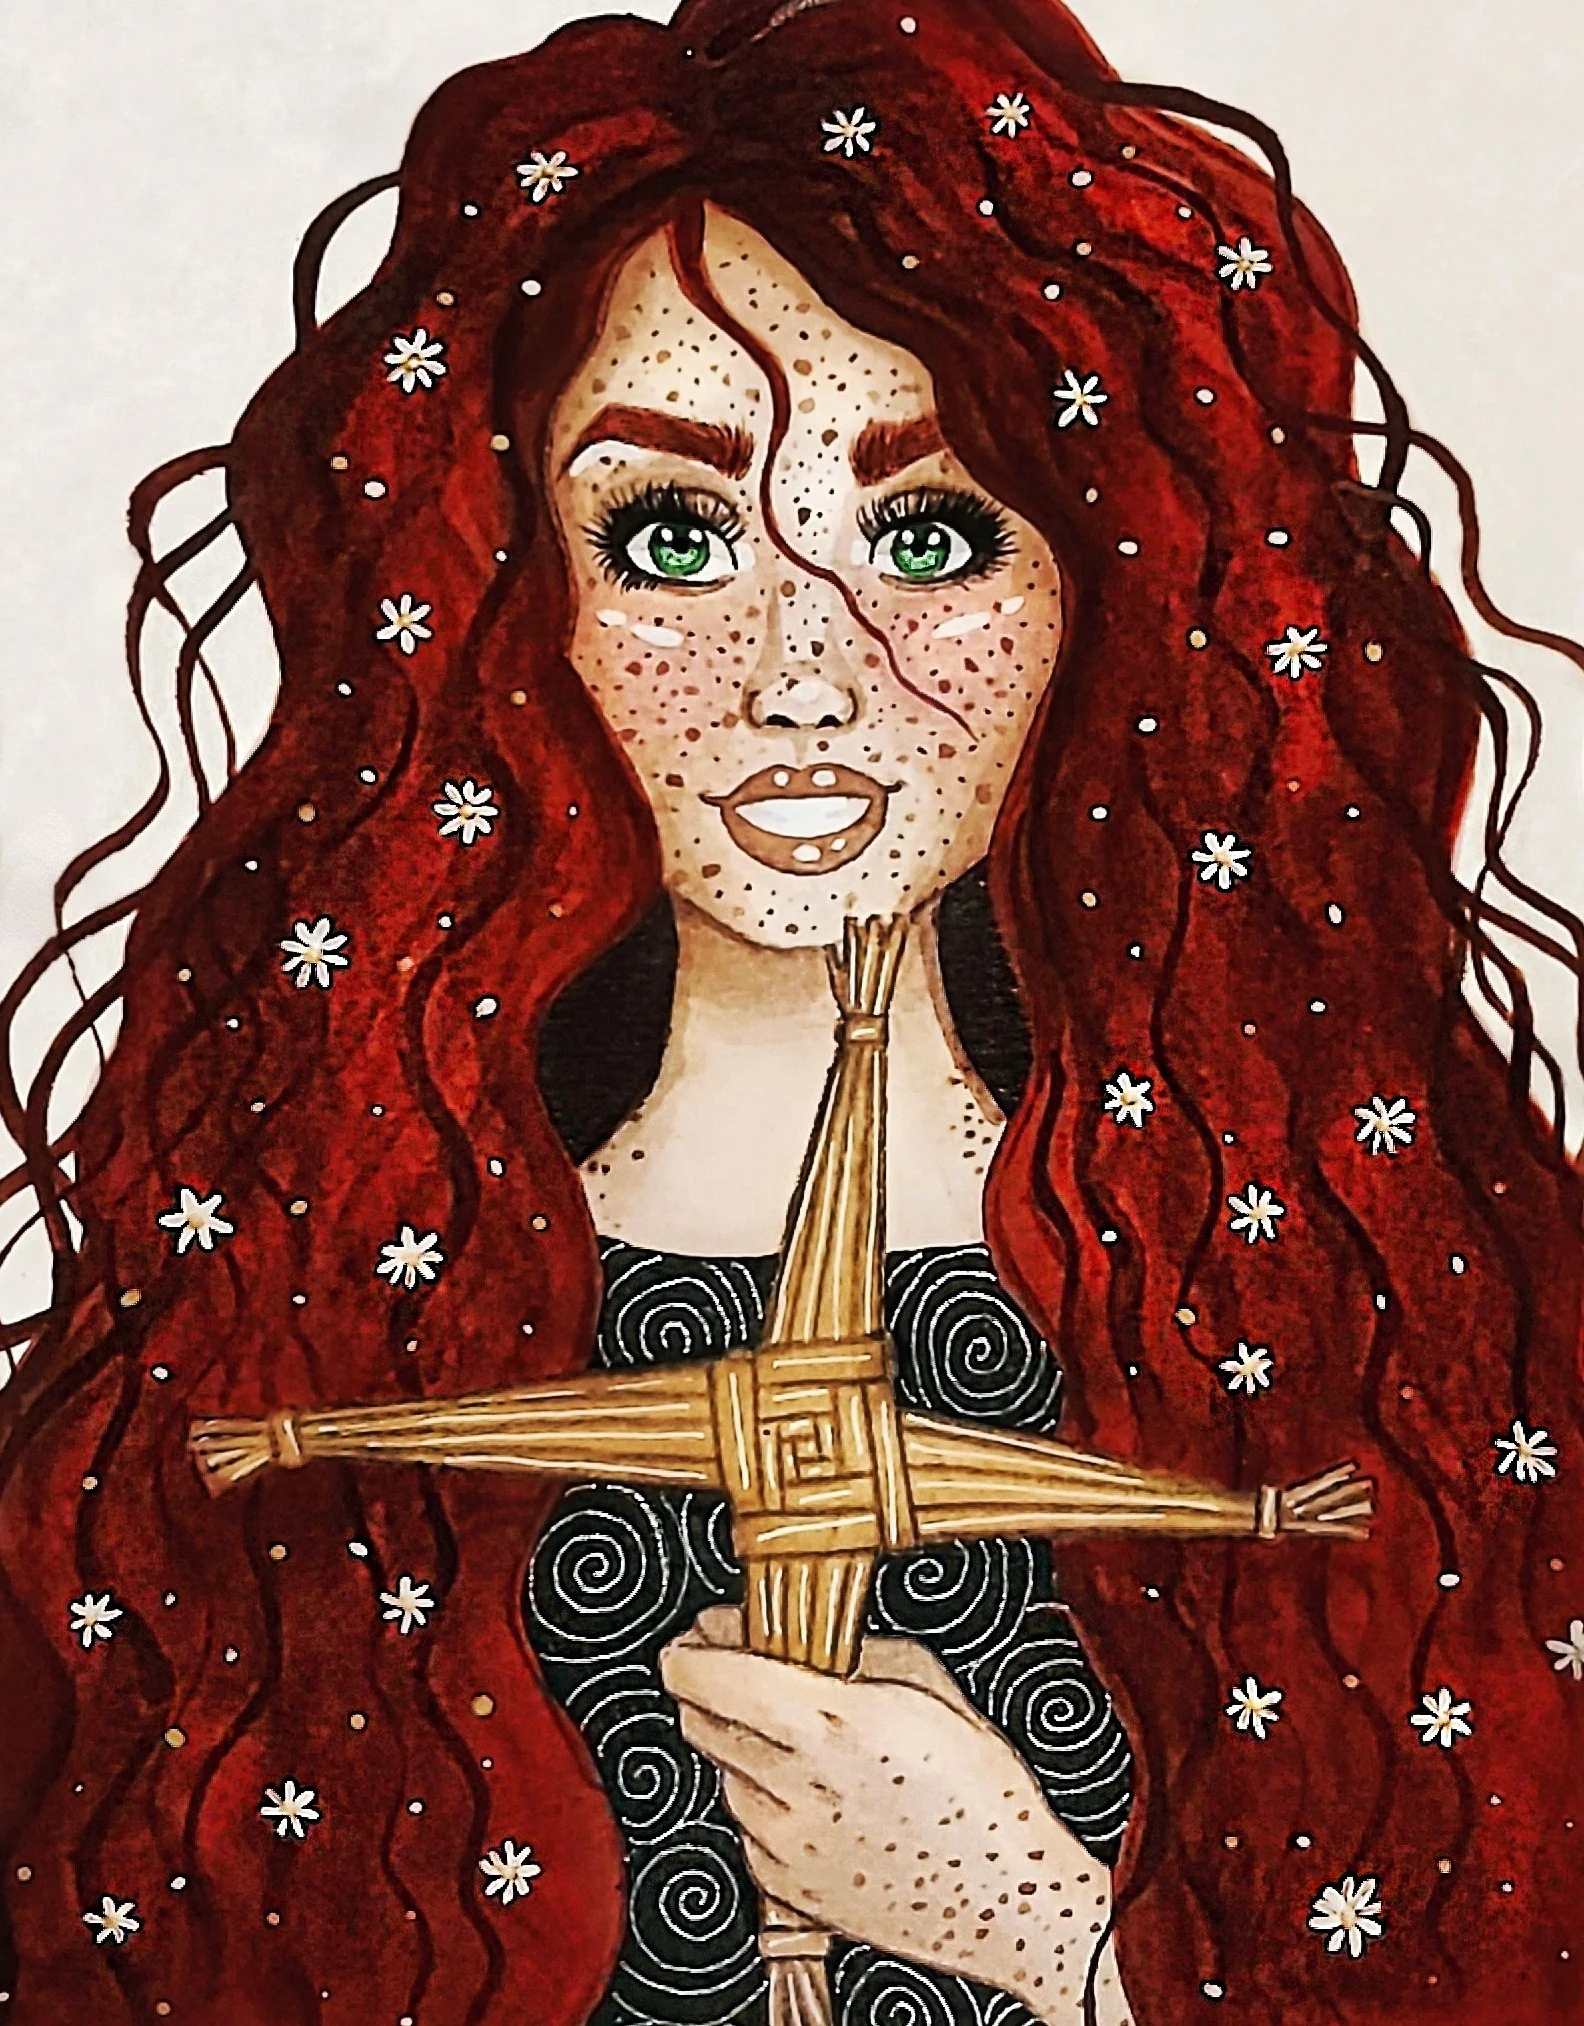 Goddess Saint Brigid Tales From The Wood Artwork Irish Mythology Shelly Mooney